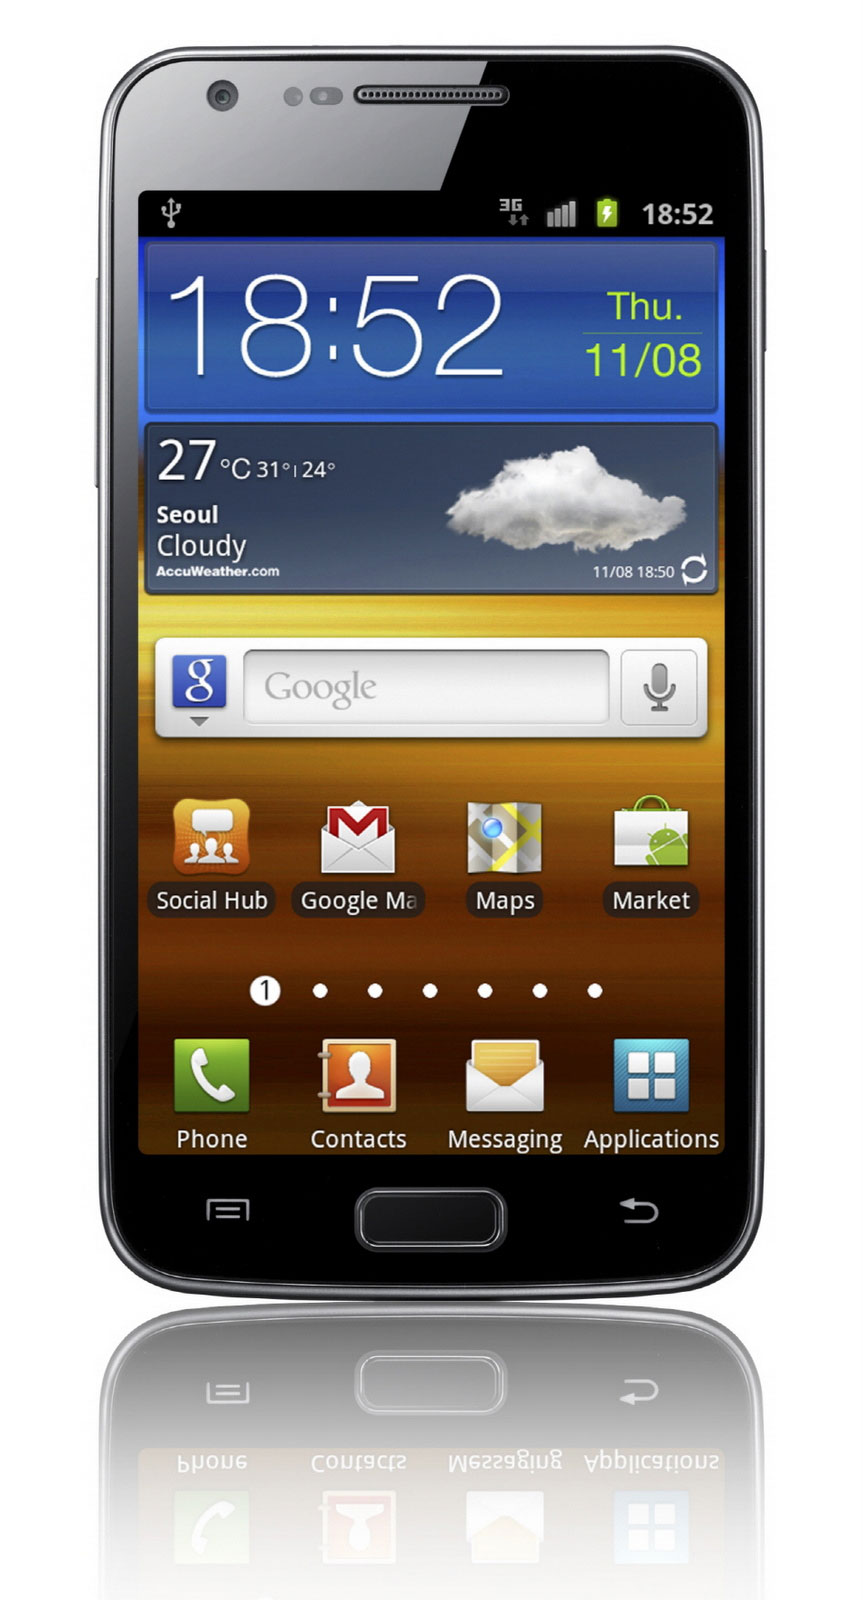 Samsung Galaxy S Ii Hd Lte Image - Samsung Galaxy S2 Hd Lte - HD Wallpaper 